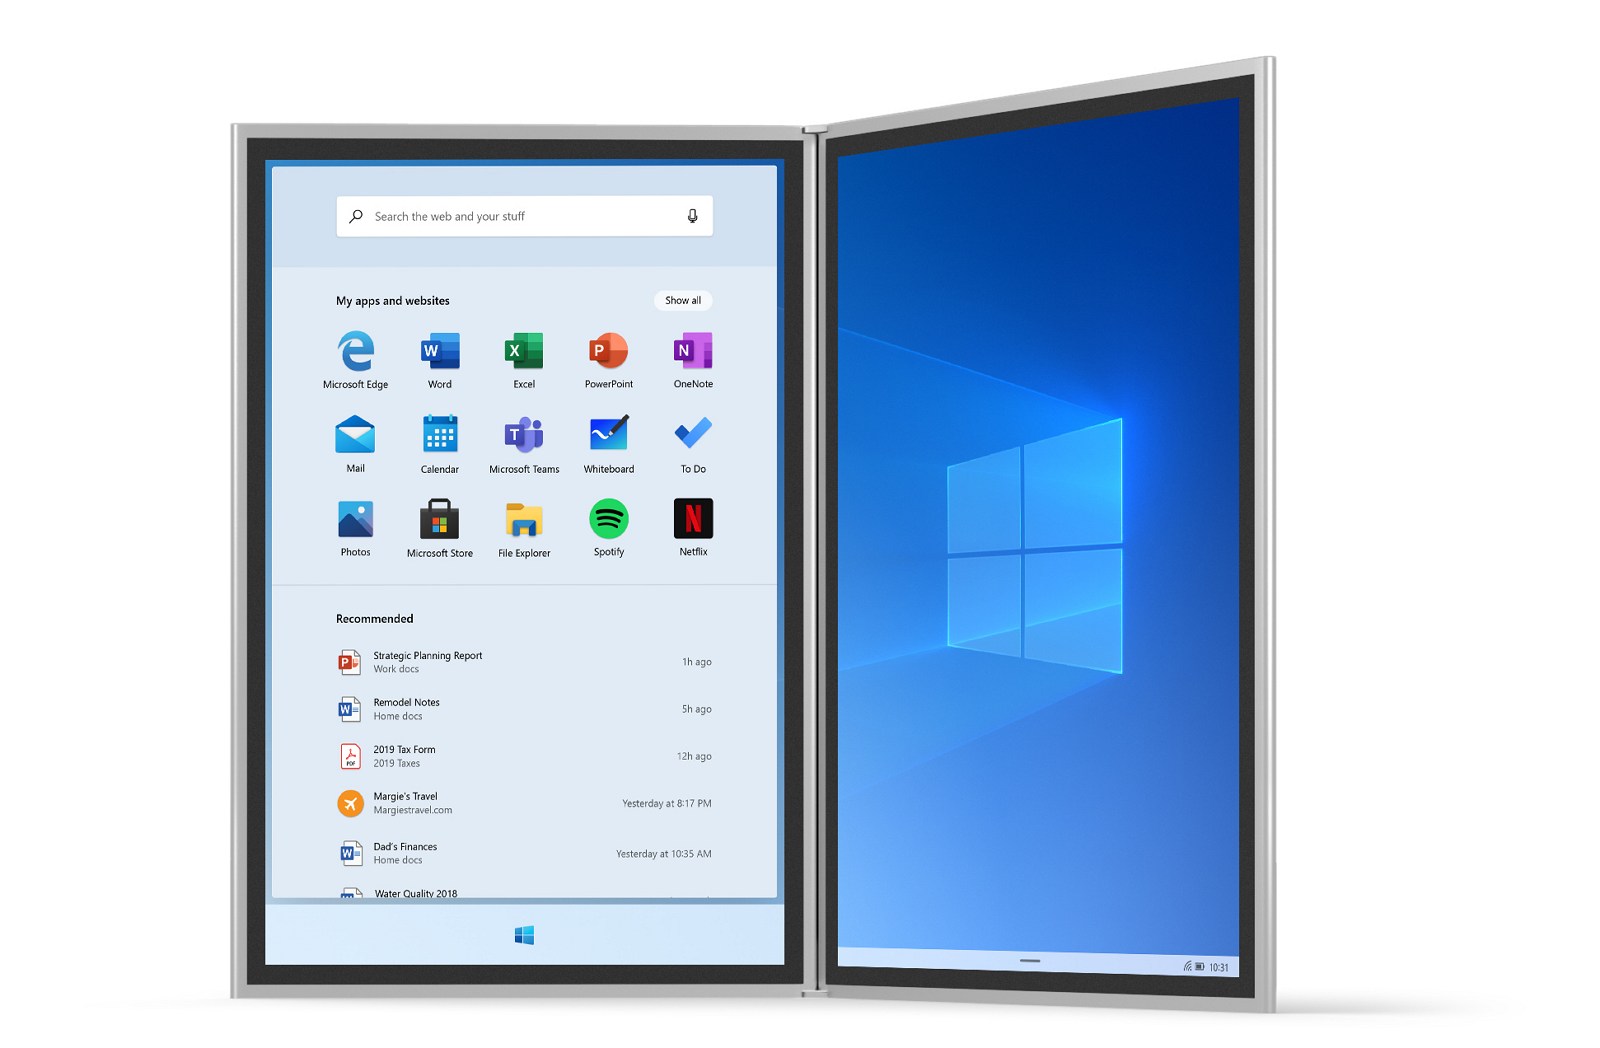 Windows 10X interface (image source Microsoft)